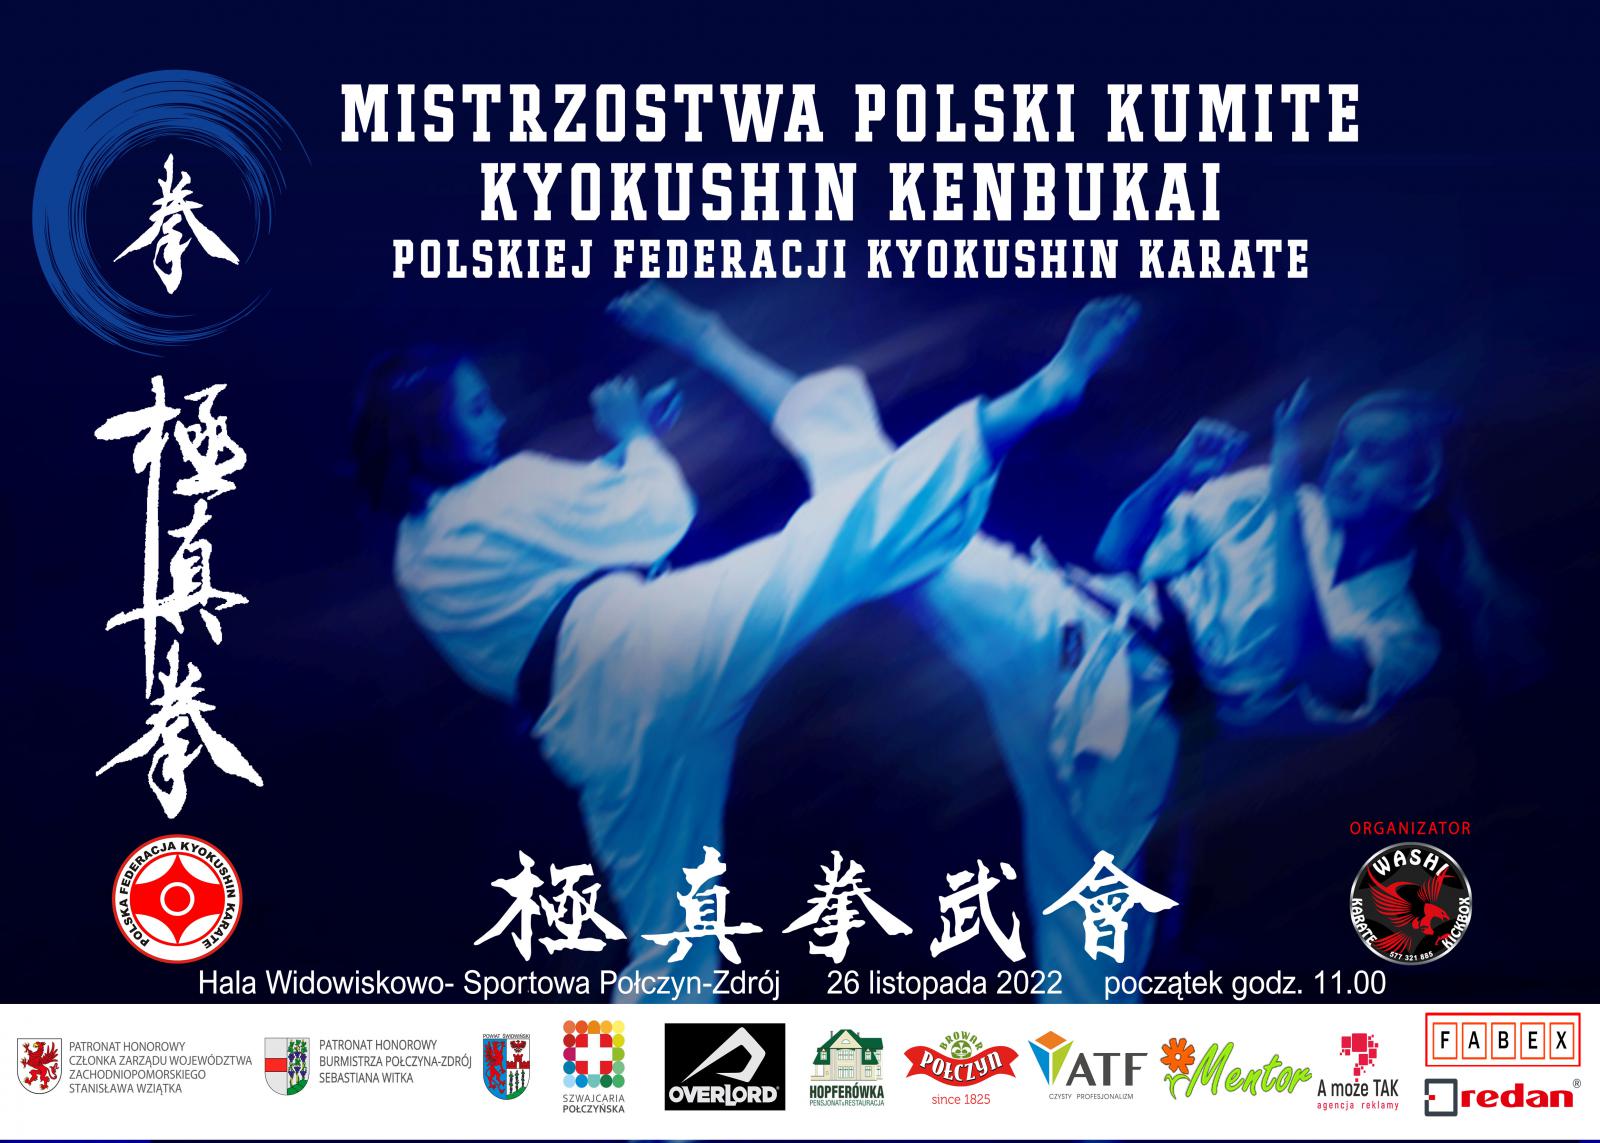 Mistrzostwach Polski Kumite Kyokushin Kenbukai